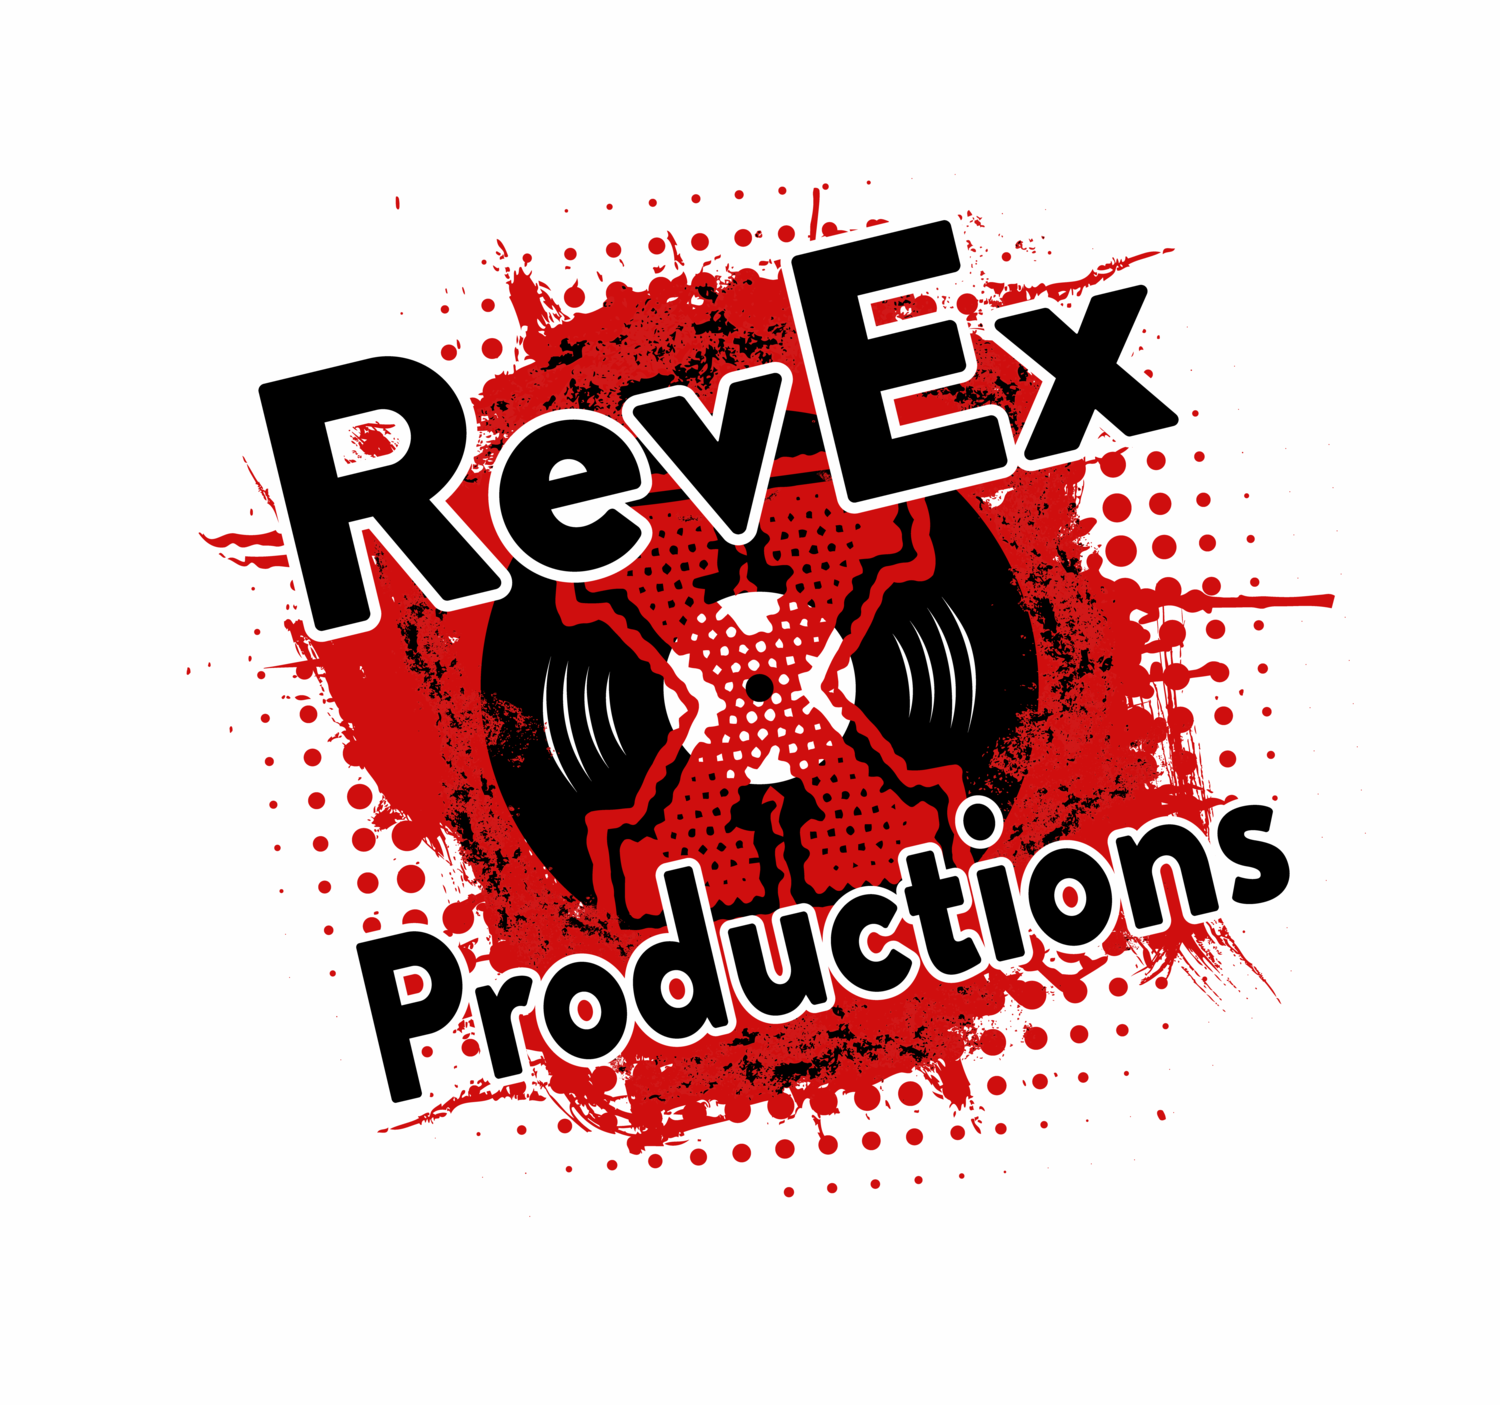 Revolutionary Exchange Productions